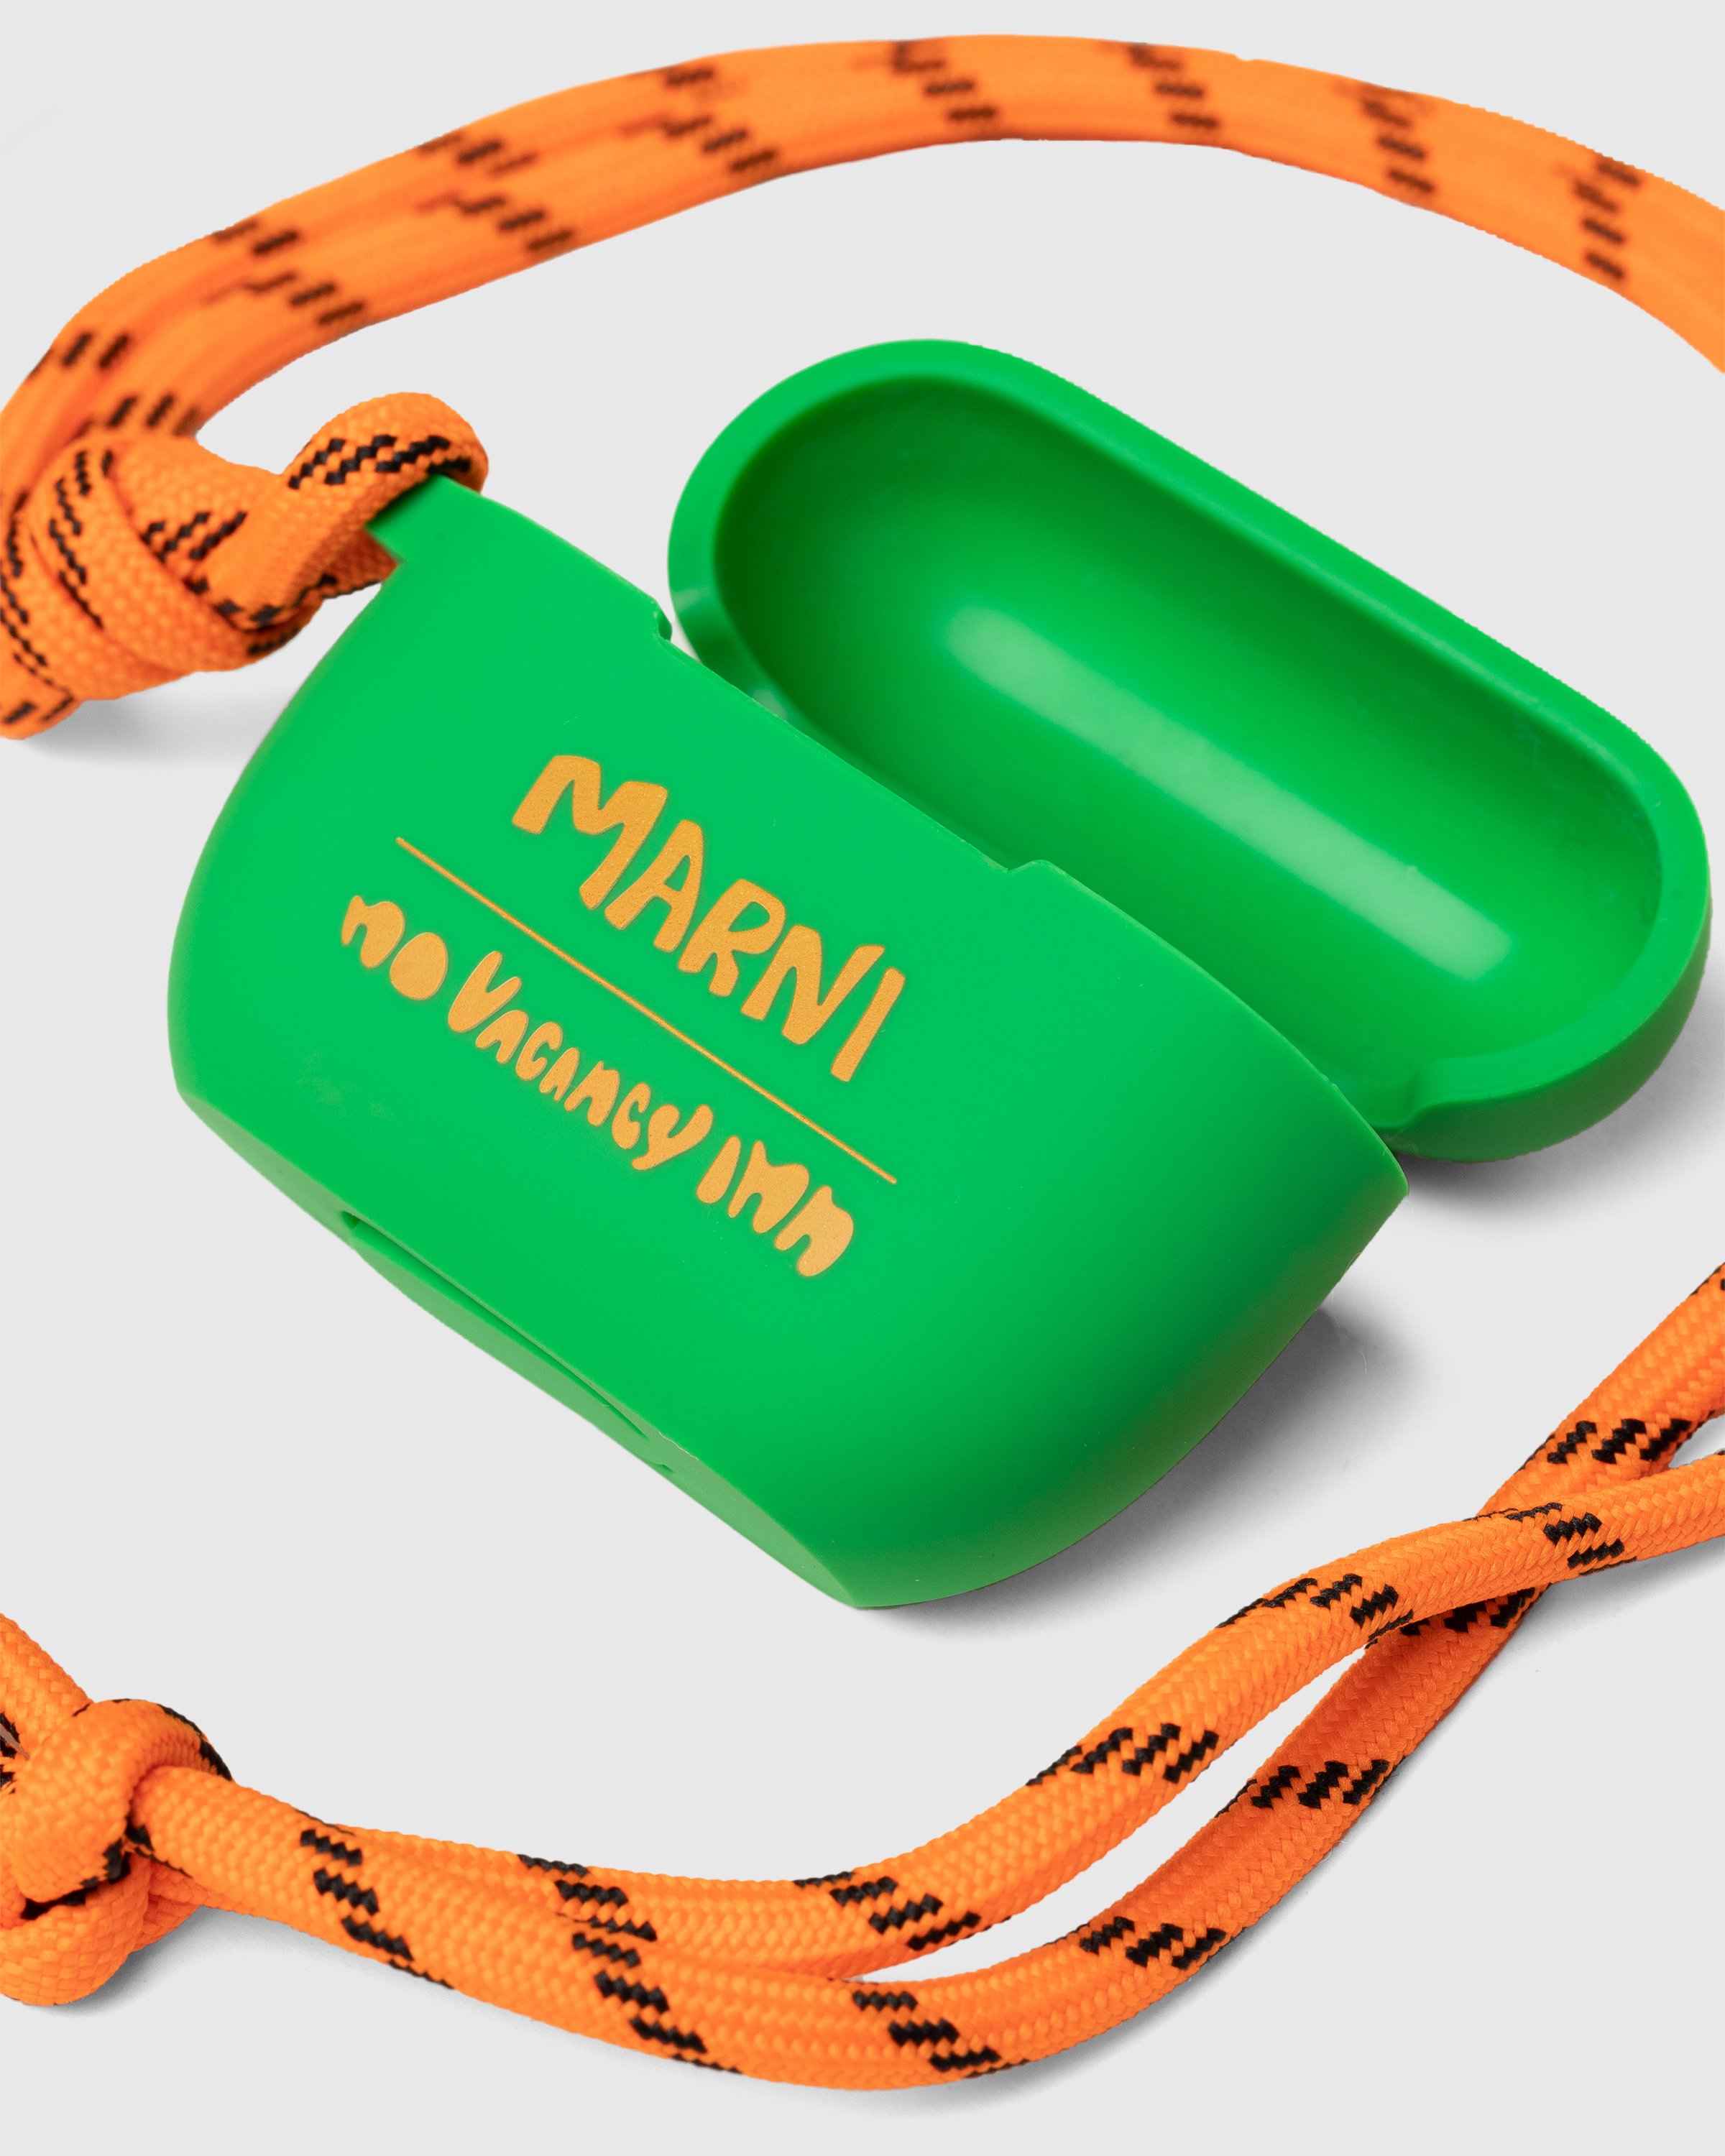 Marni x No Vacancy Inn - AirPods Case Garden Green/Orange - Accessories - Green - Image 3